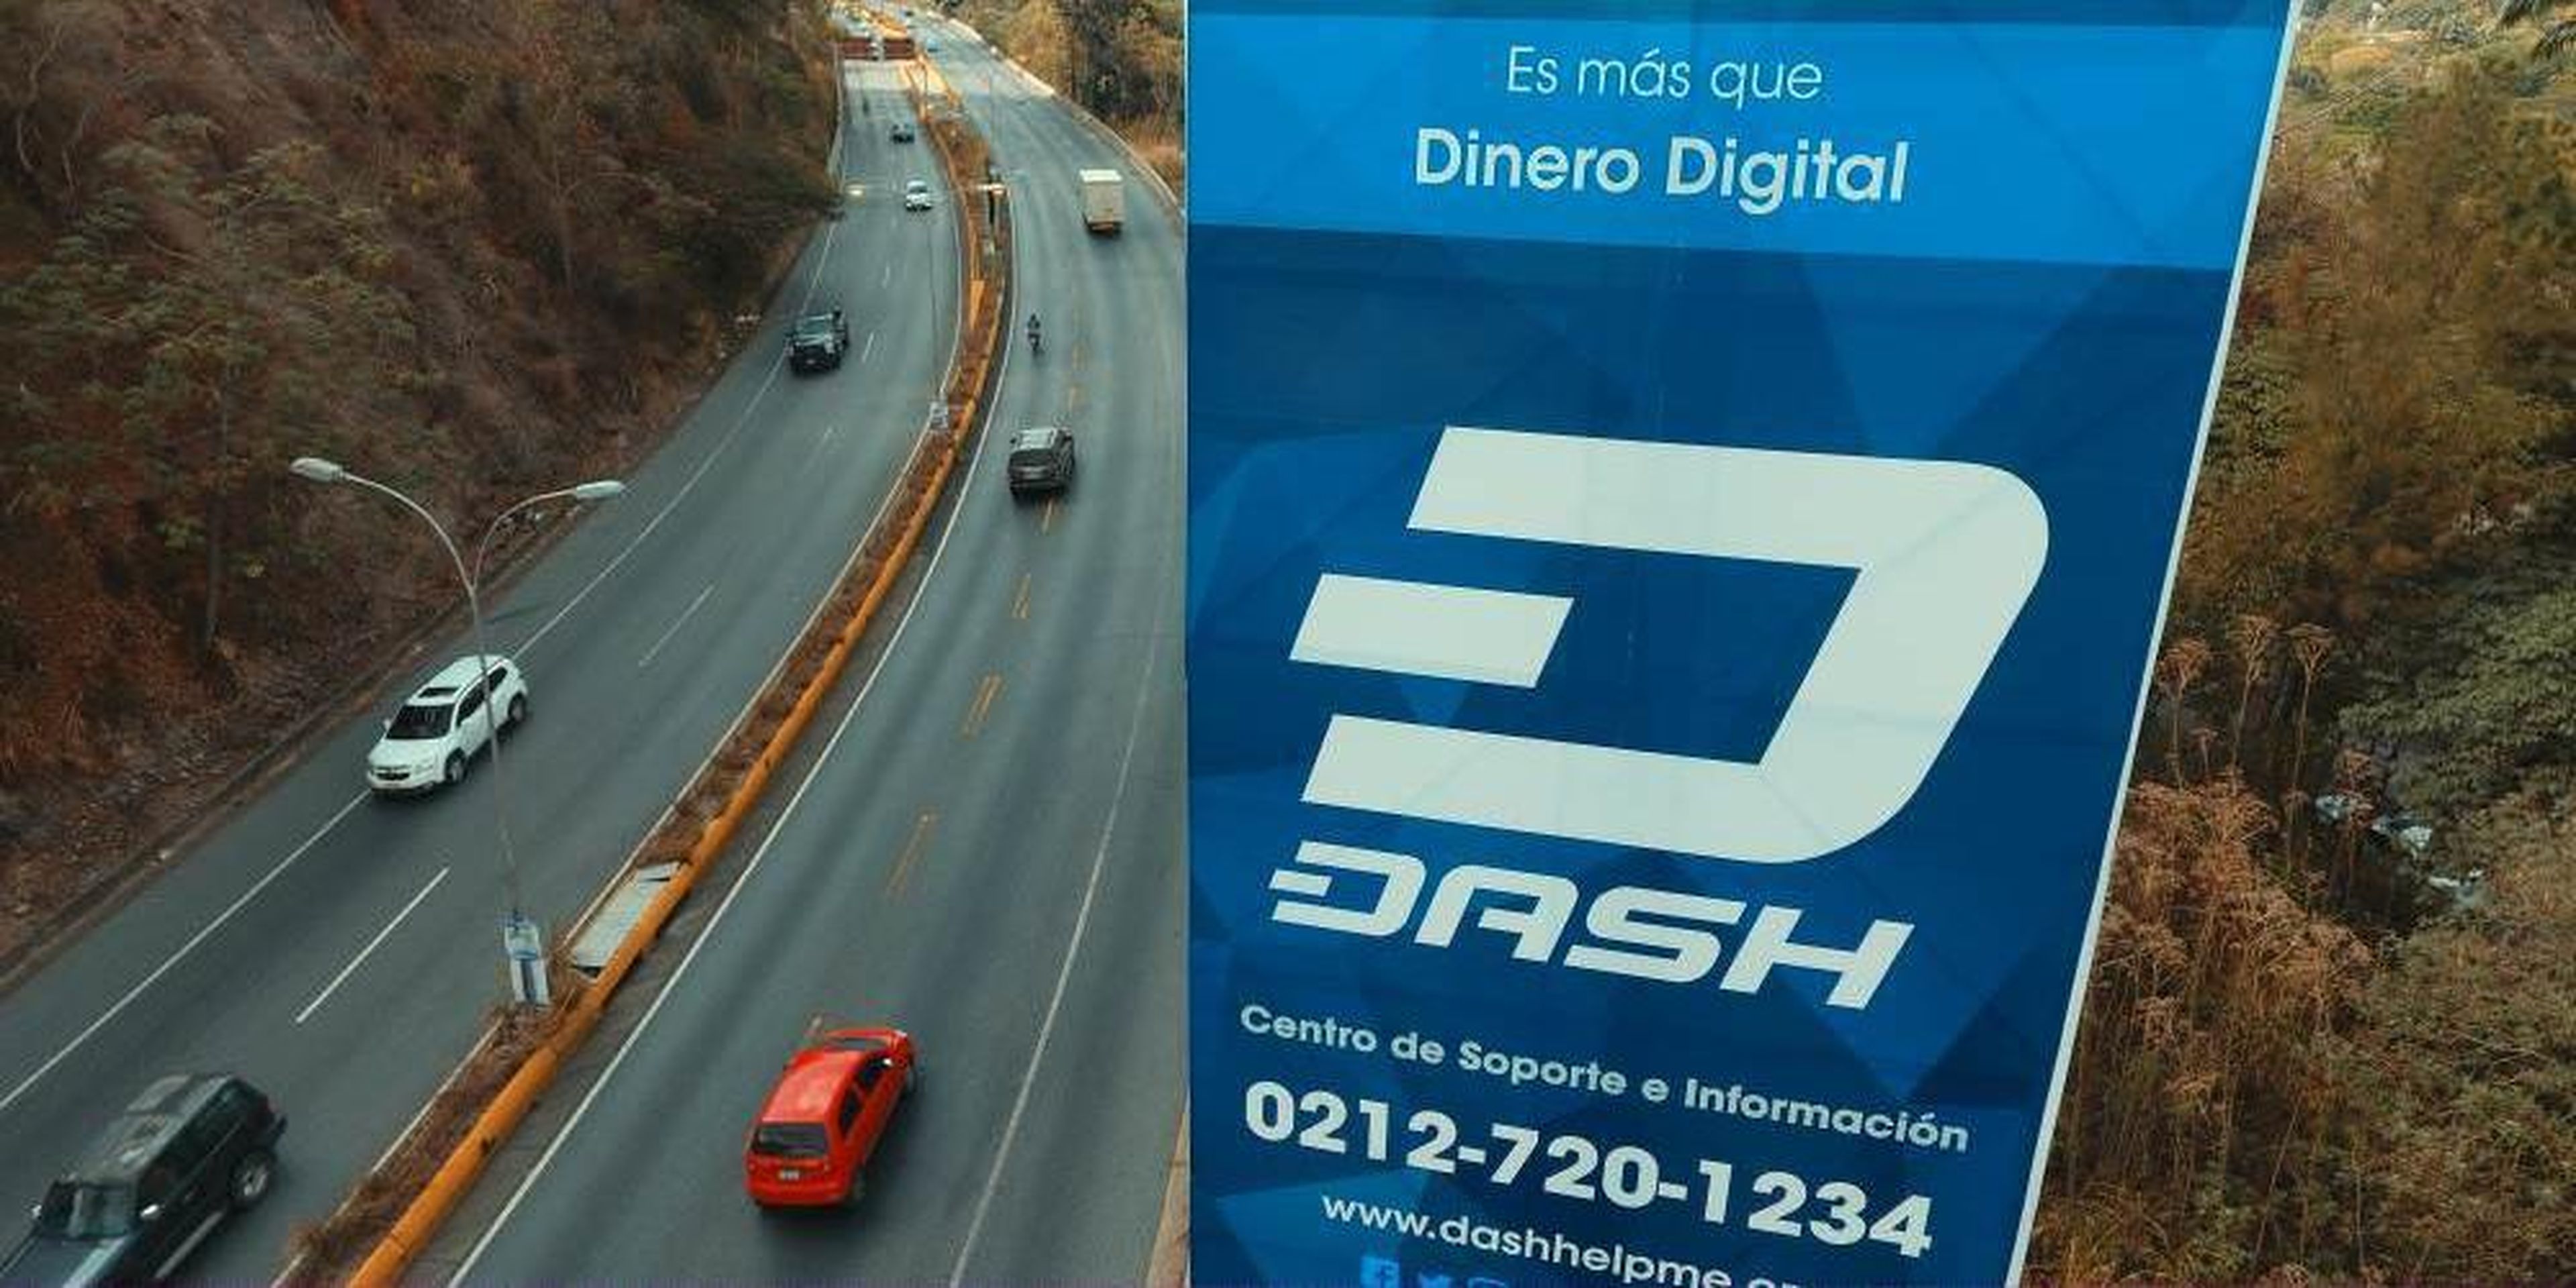 A Dash billboard in Venezuela.